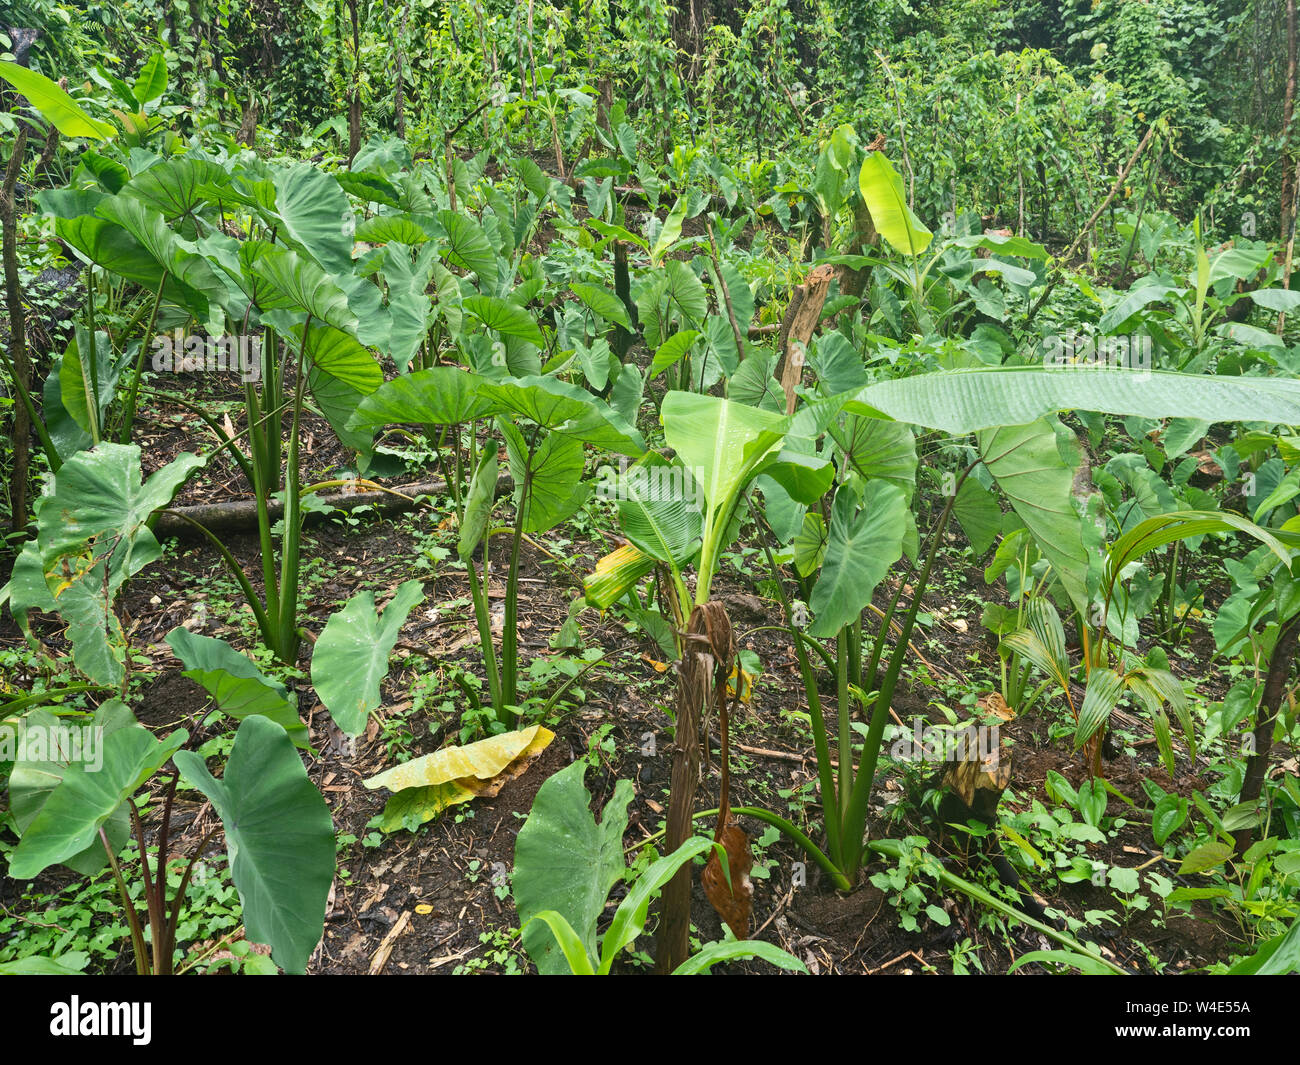 Wald Garten Obst und Gemüse angebaut werden, einschließlich Kumara, Taro, Bananen, frühlingszwiebeln etc Nara, Makira Insel, die Salomonen, South Paci Stockfoto